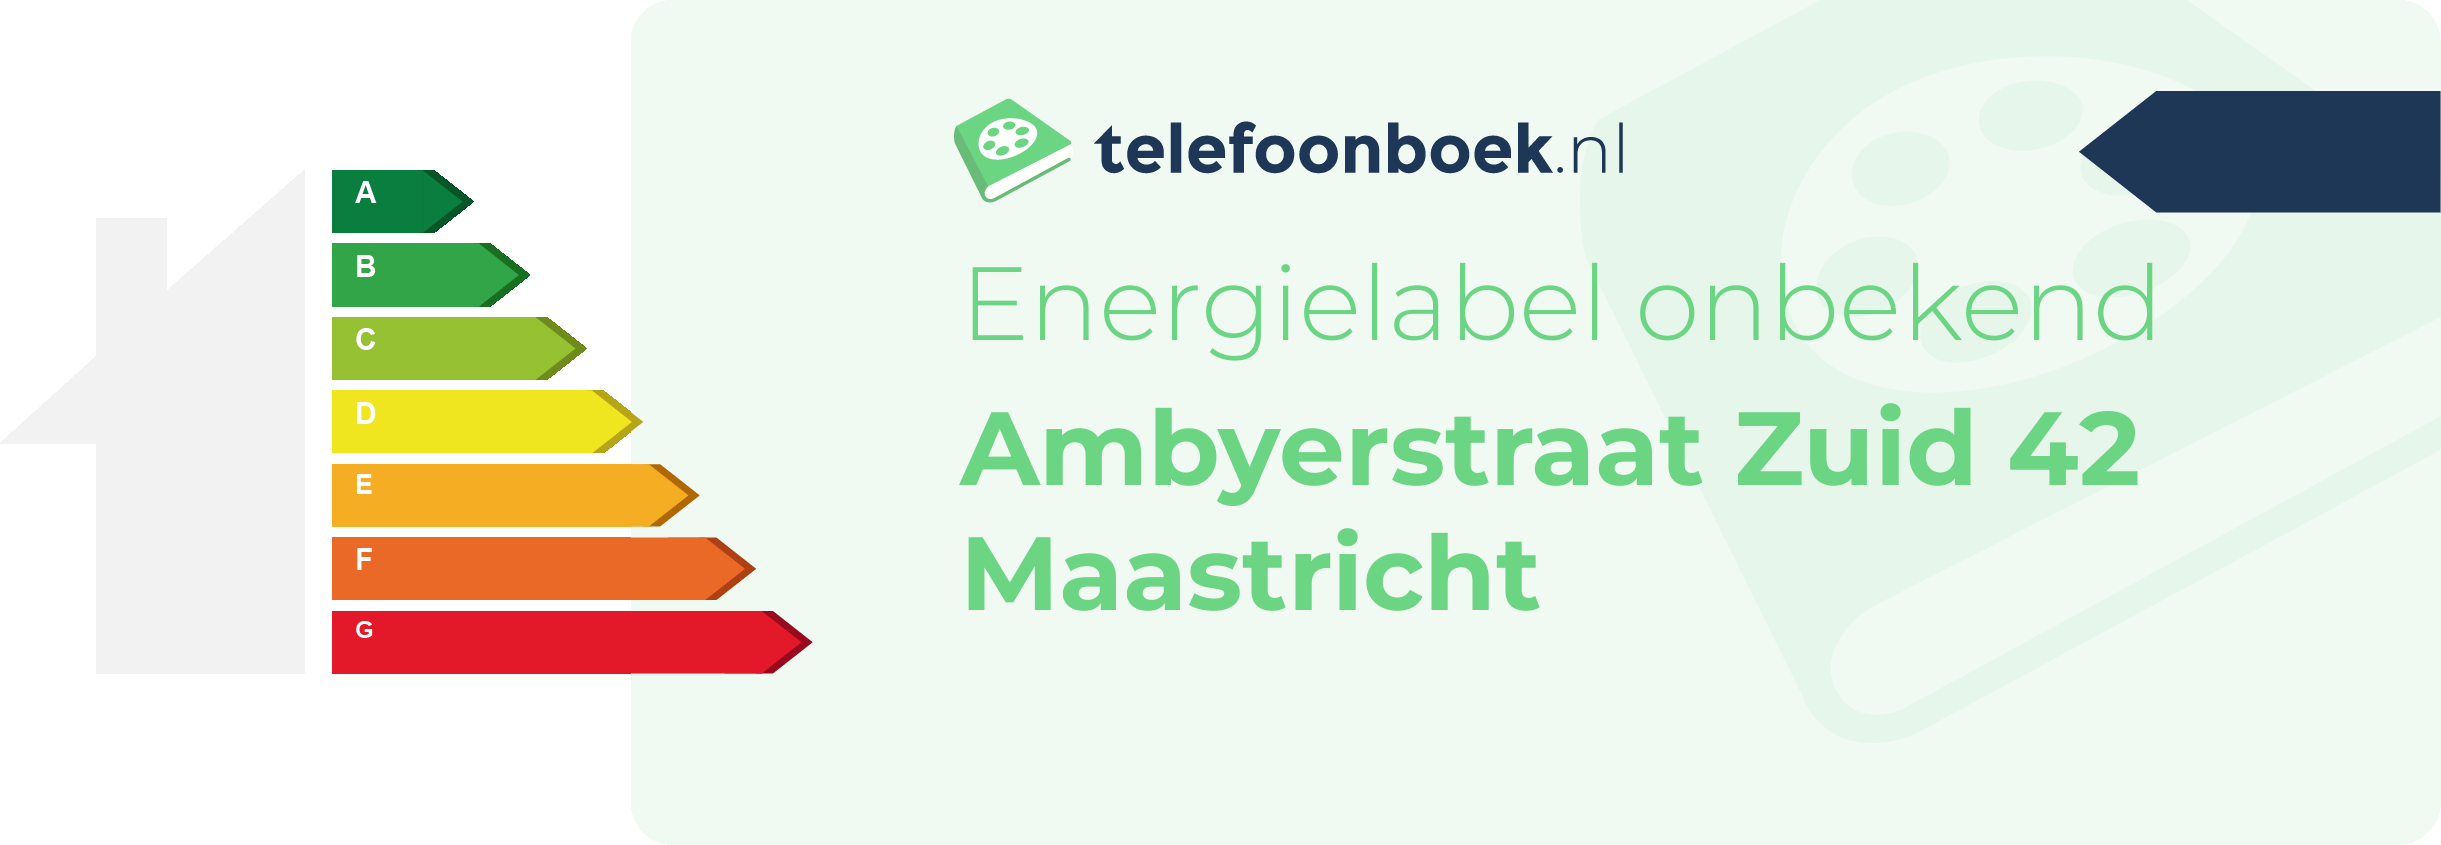 Energielabel Ambyerstraat Zuid 42 Maastricht